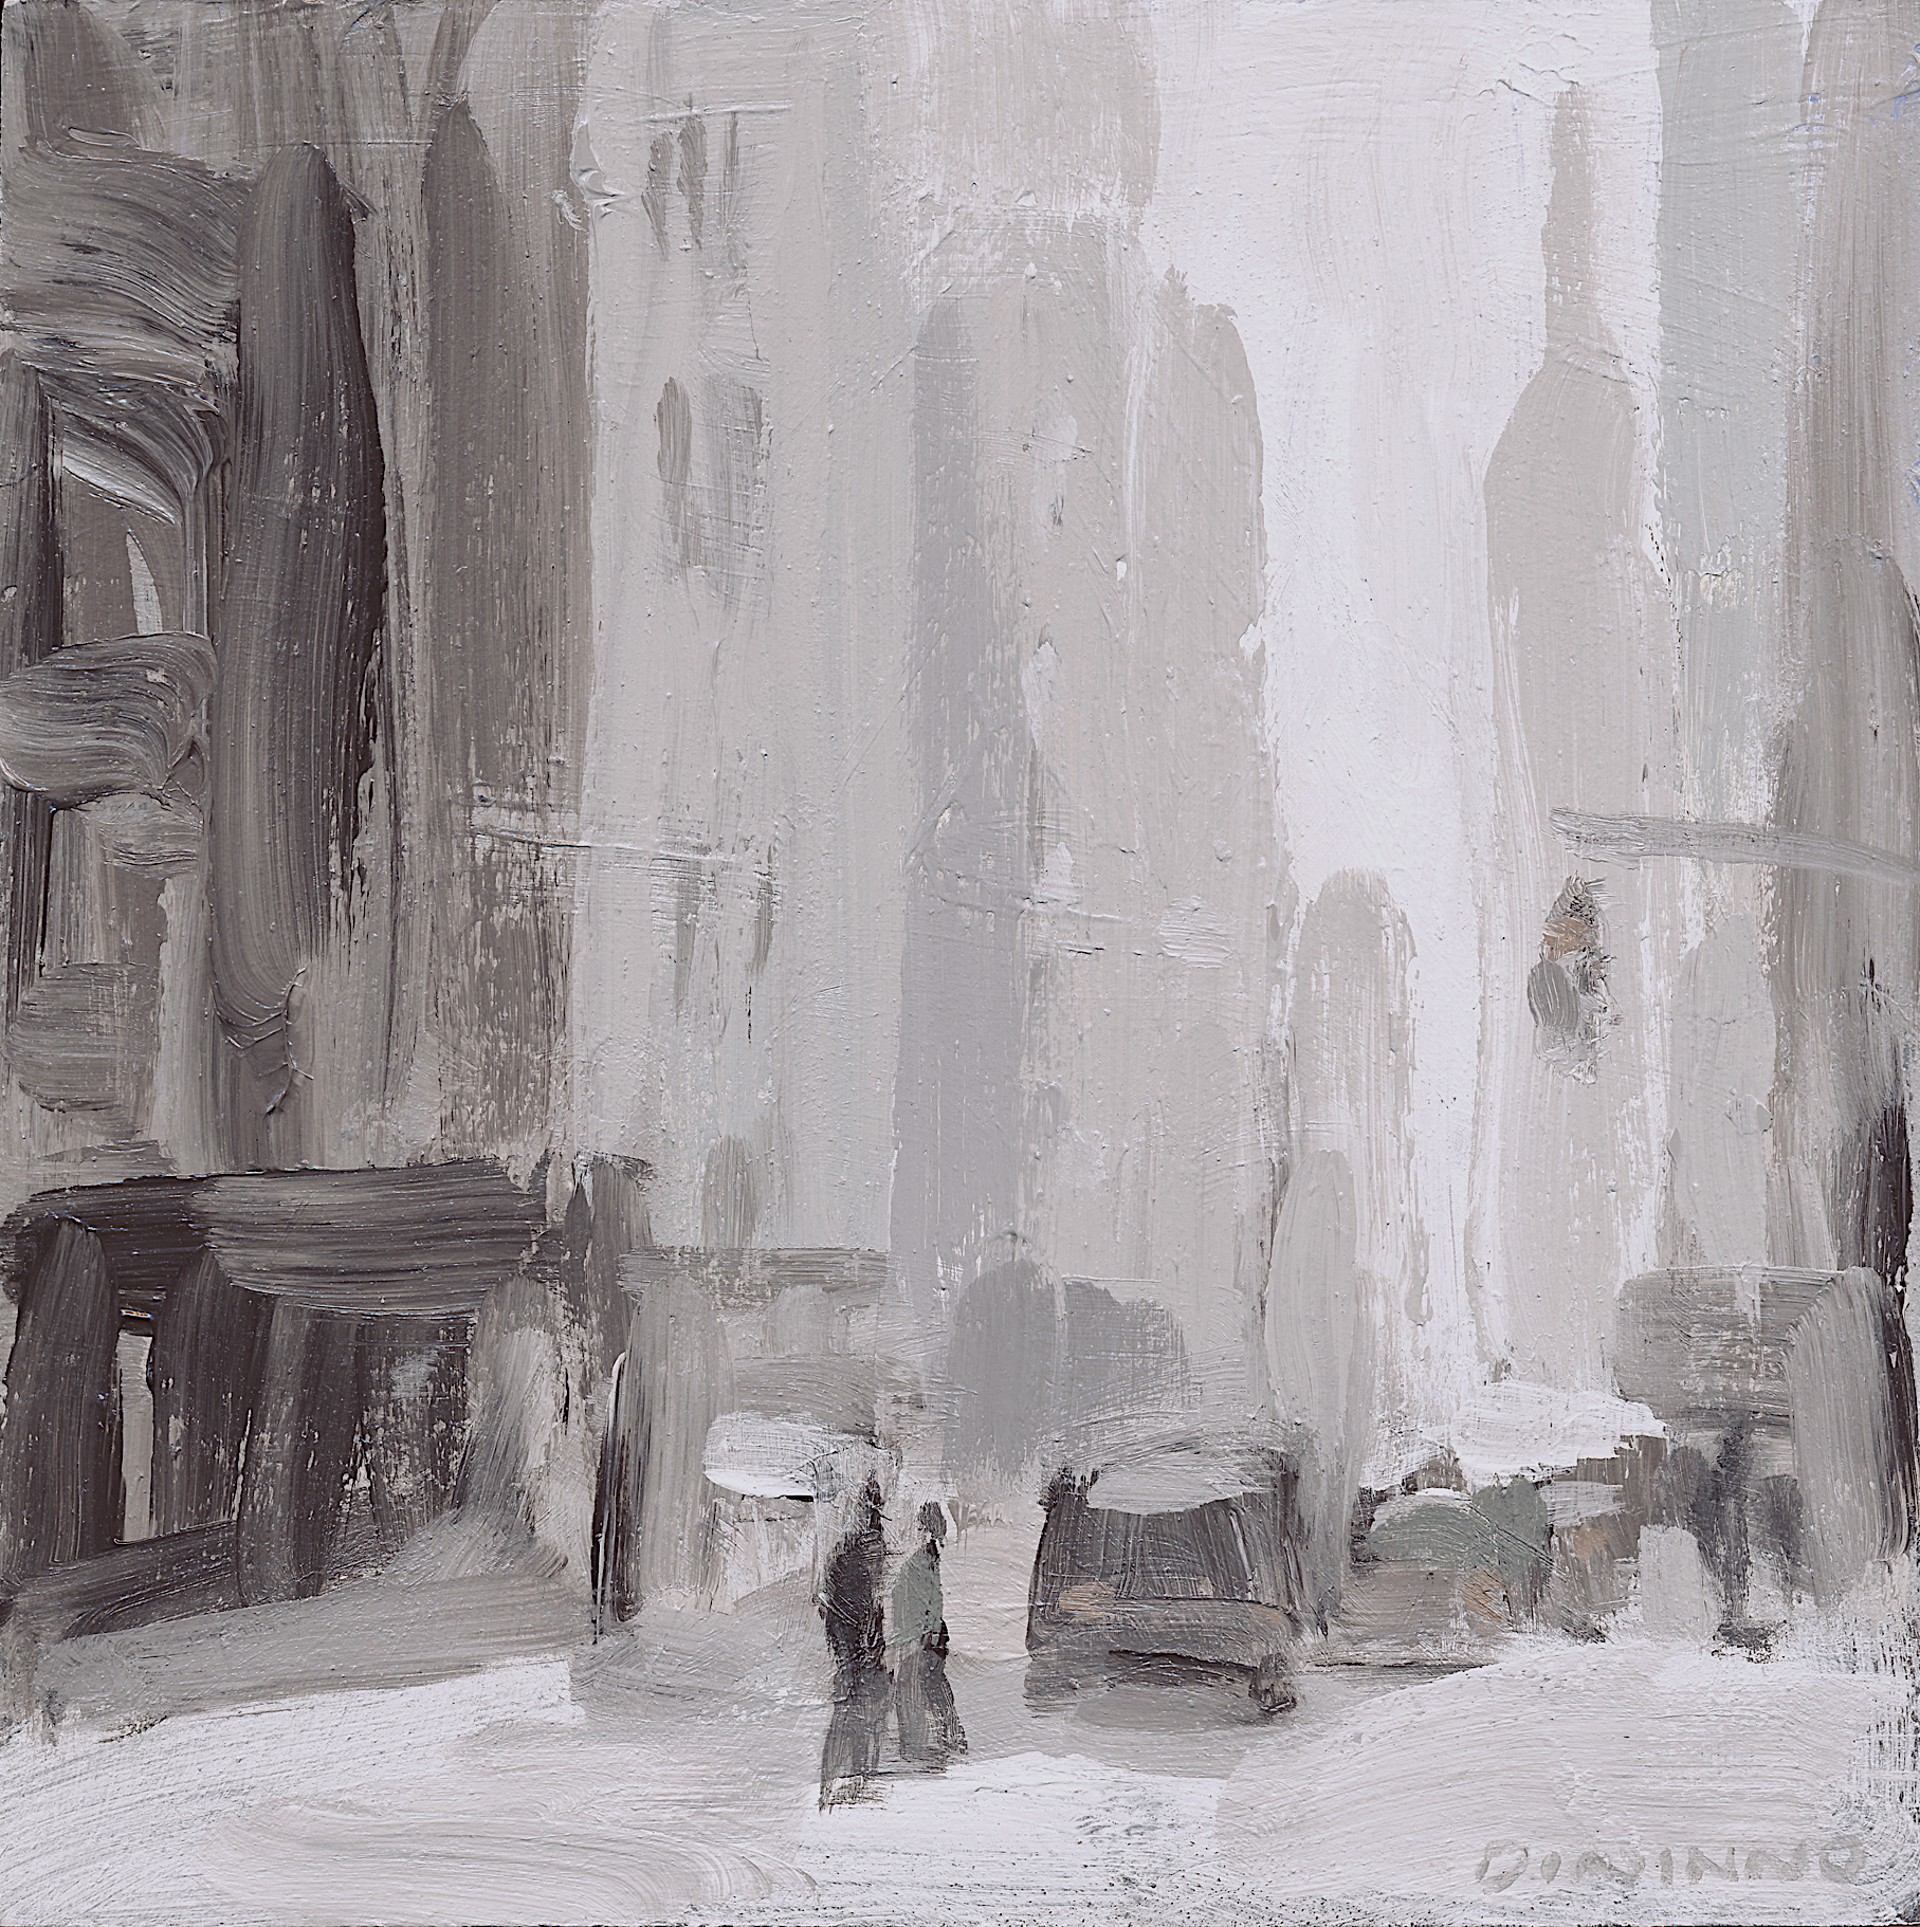 Winter in New York II by Steve Dininno